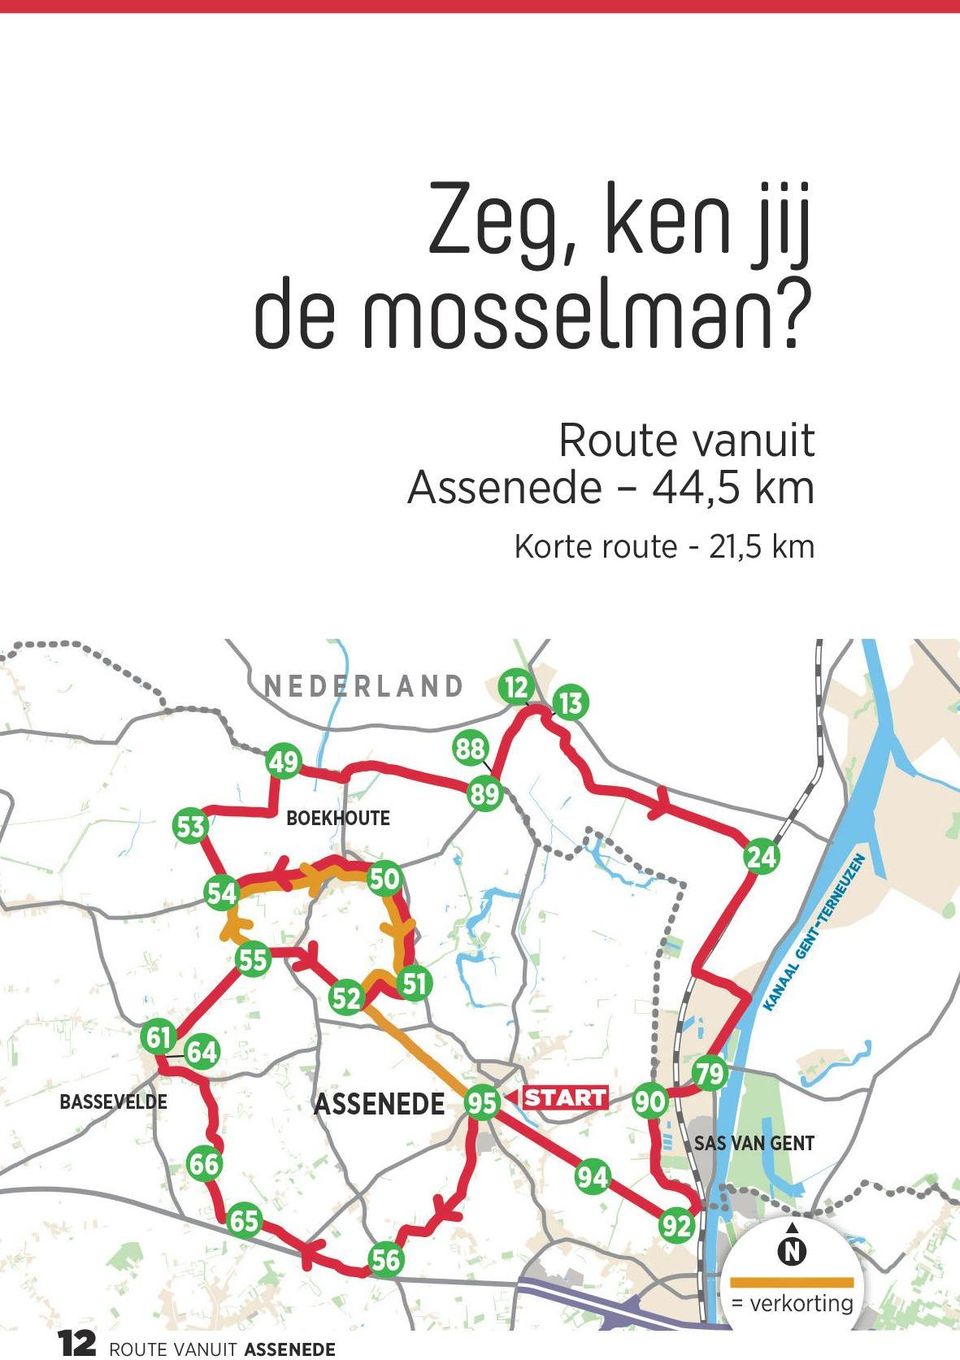 Korte route - 21,5 km 12